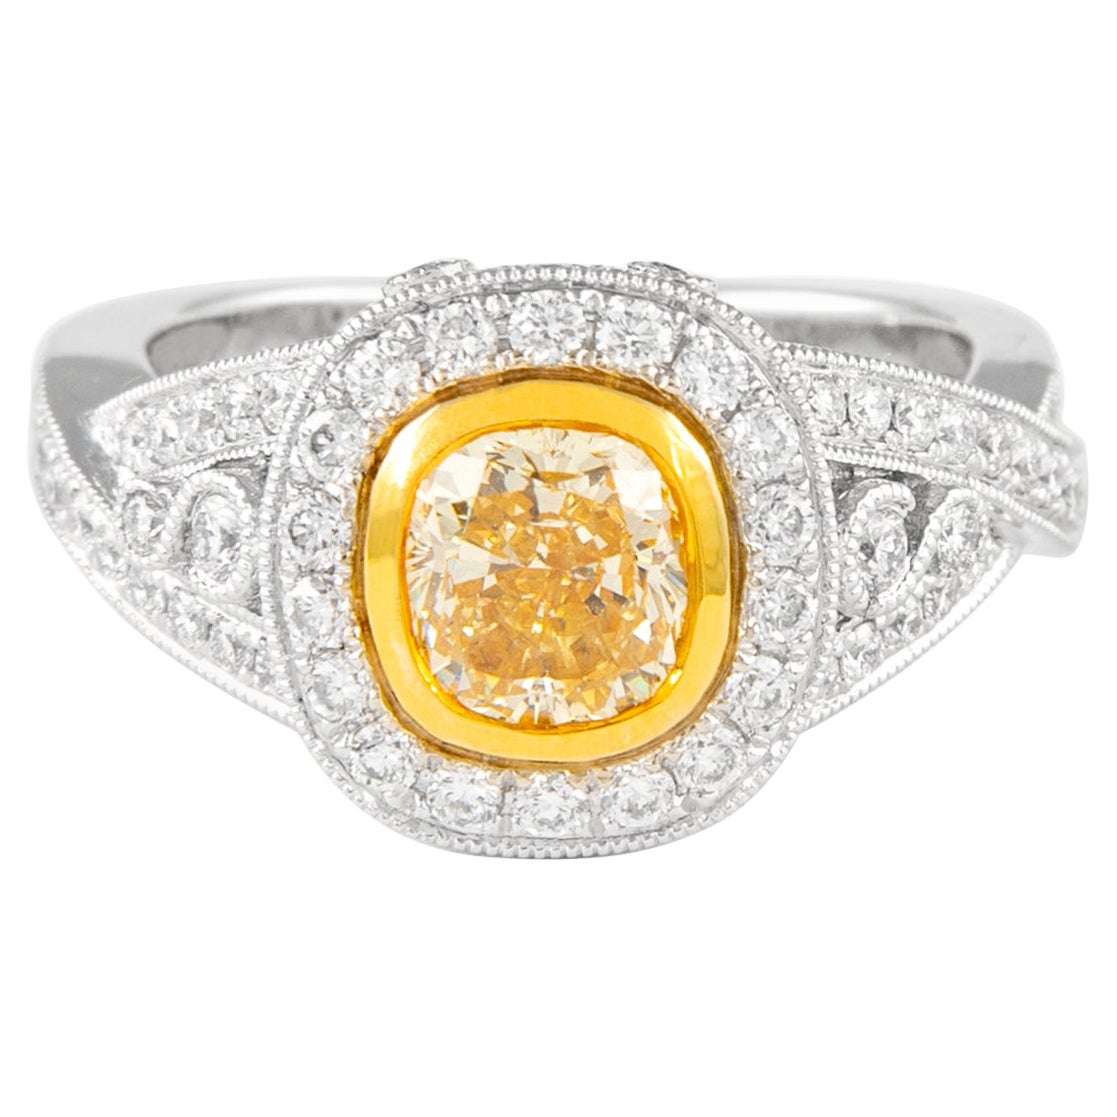 Alexander 1.31ct Fancy Intense Yellow Cushion Diamond with Halo Ring 18k Two Ton